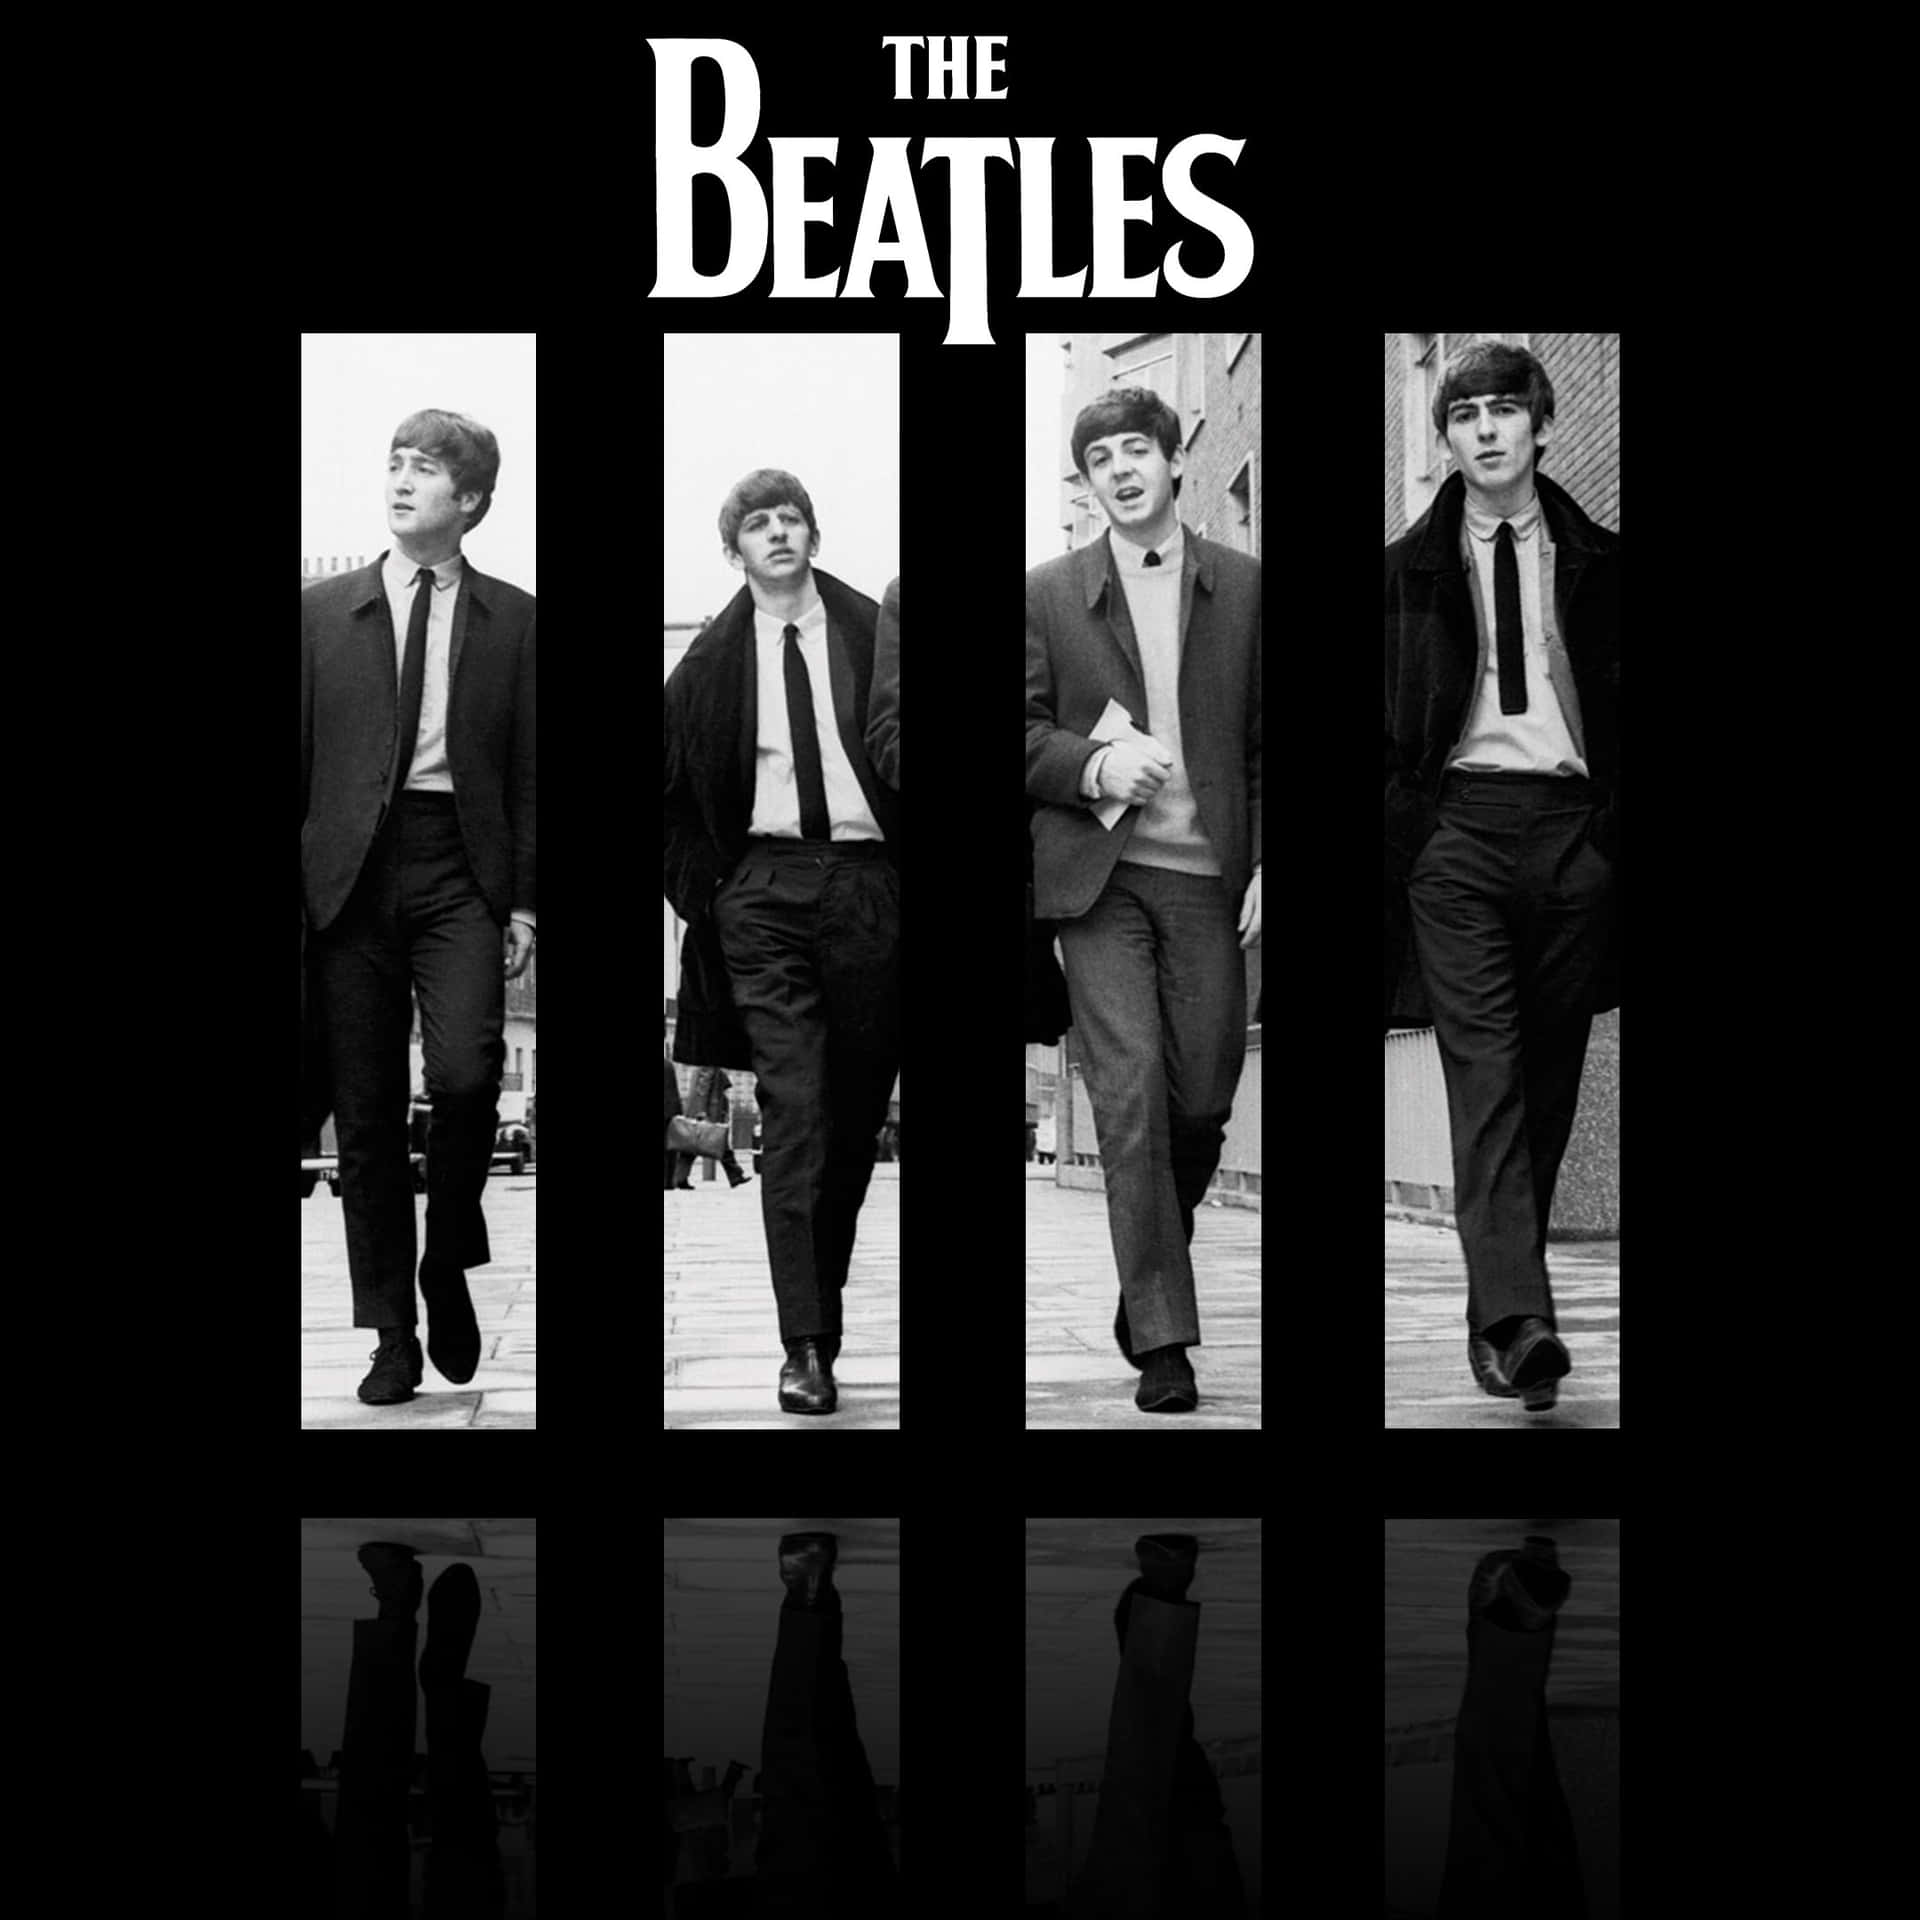 Iconic Beatles Group Photo